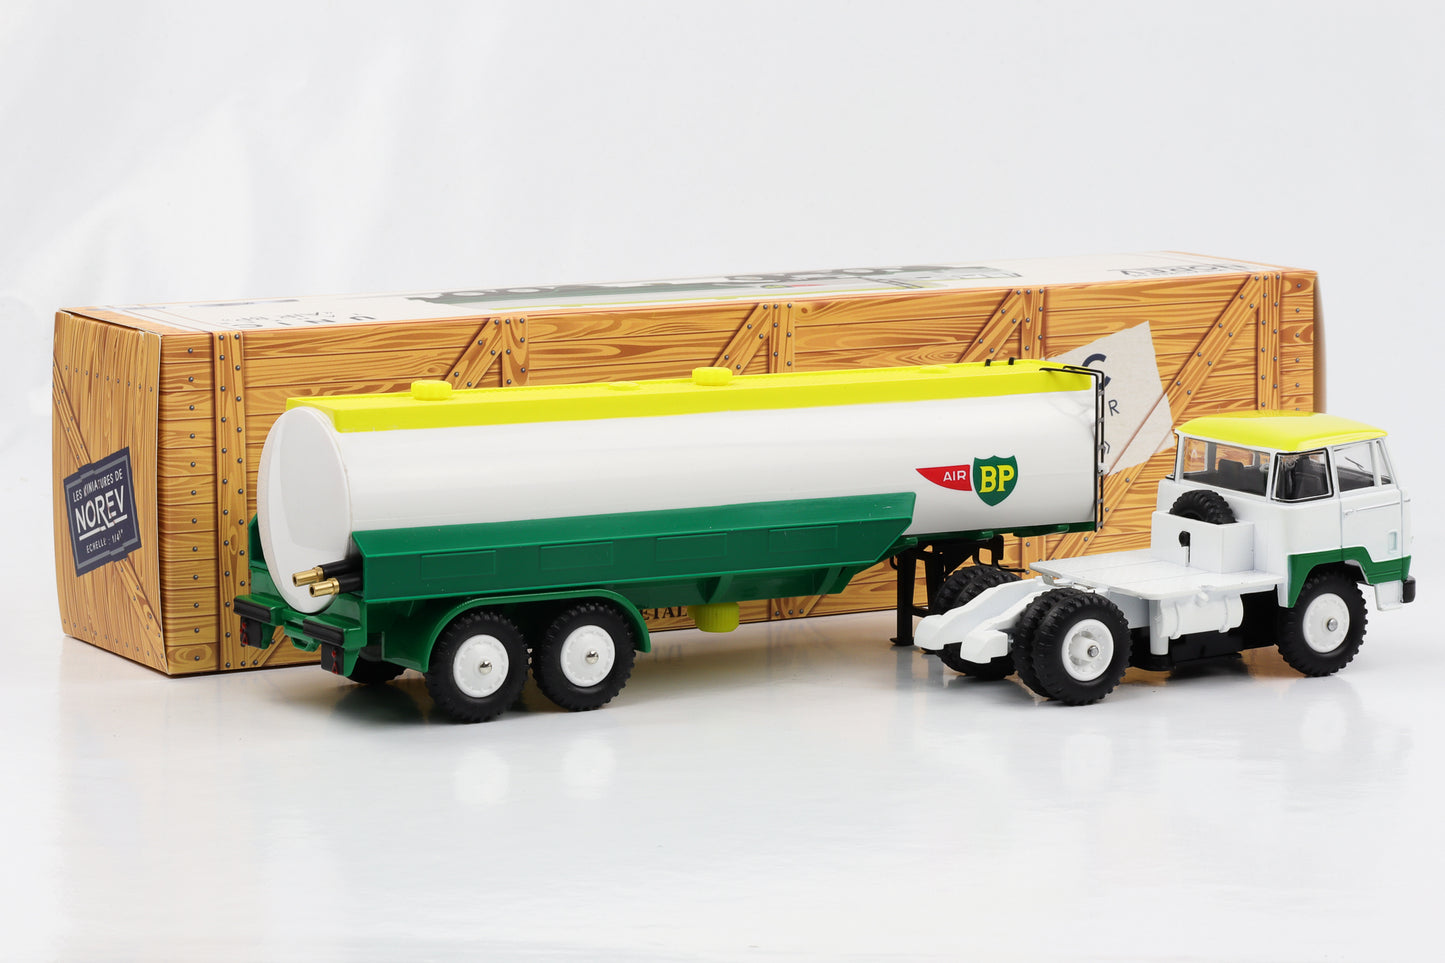 1/43 Unic Esterel camion citerne Air BP blanc-jaune-vert Norev miniature